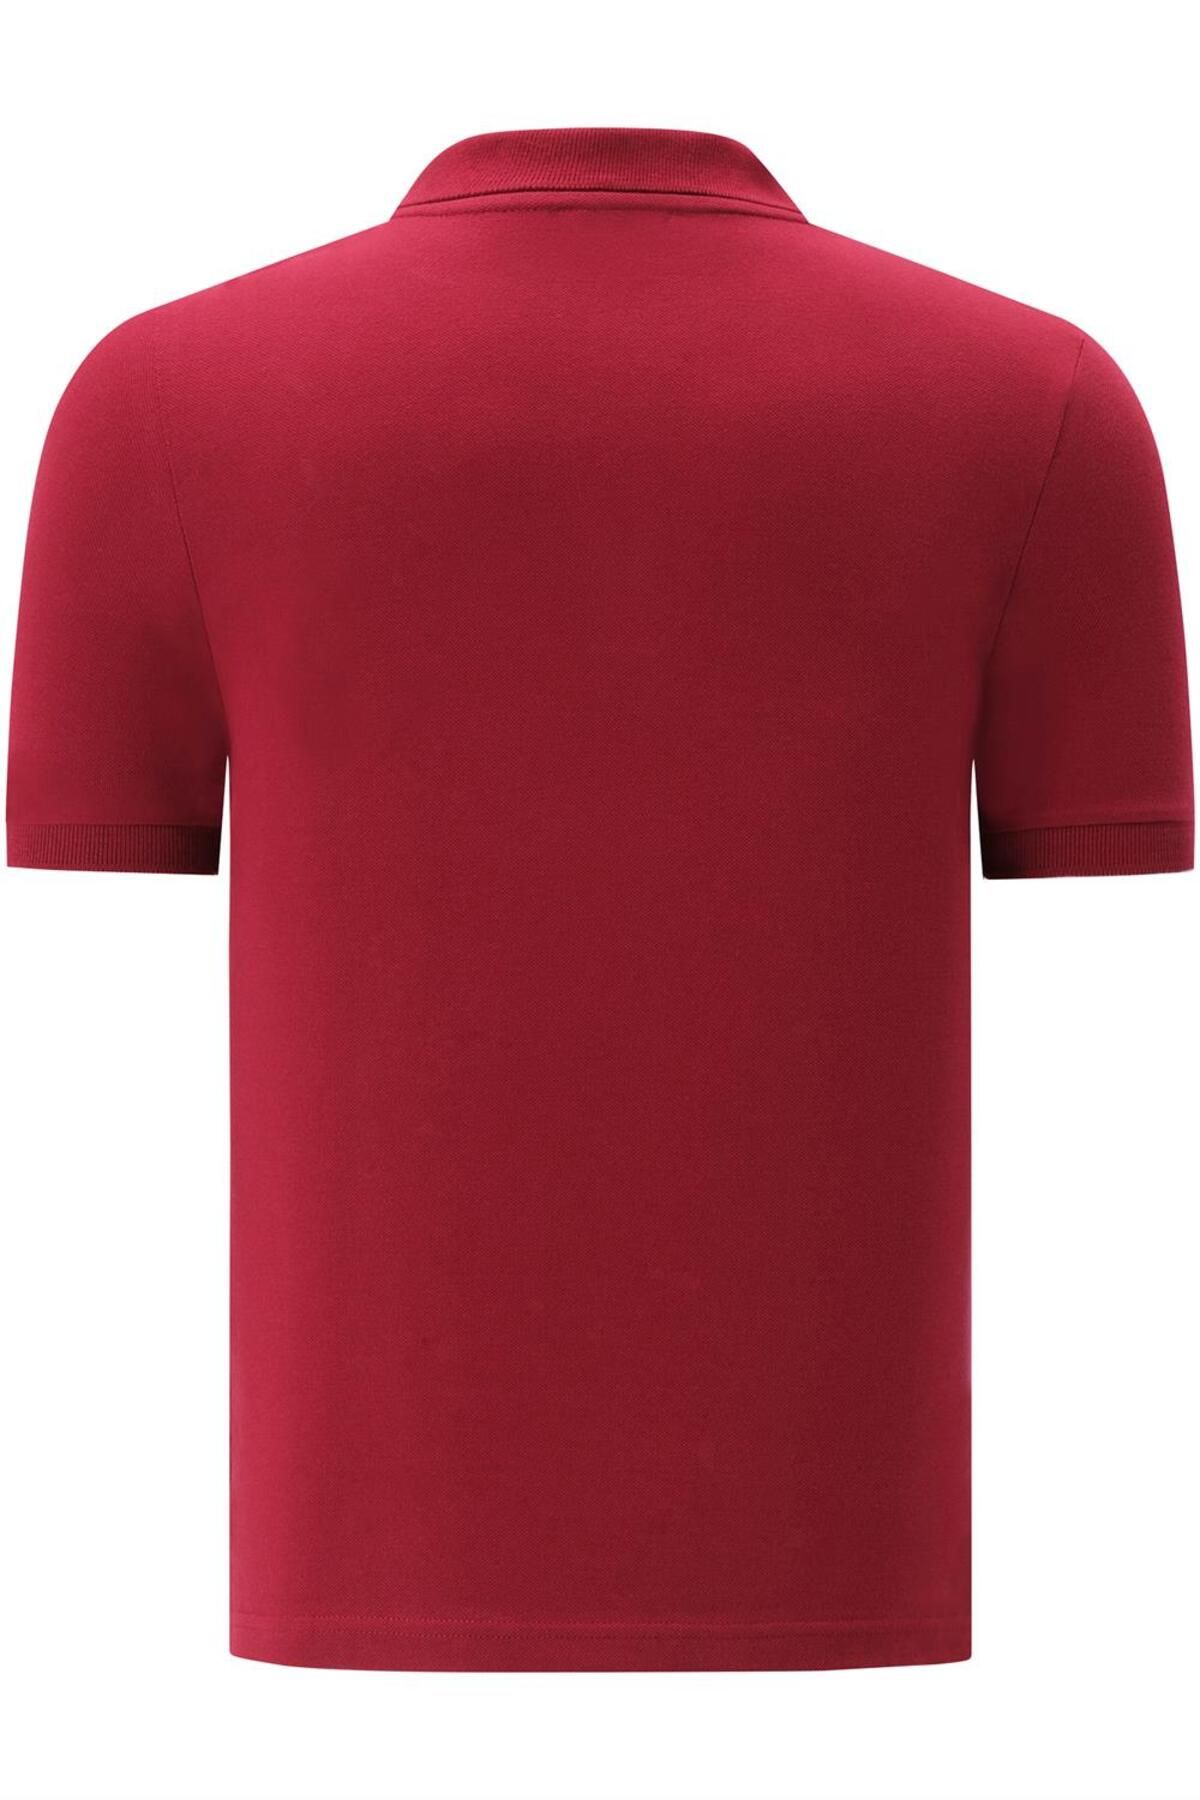 Dewberry تی شرت مردانه دو ست T8561 DEWBERRY-سورمه ای-سرمه ای